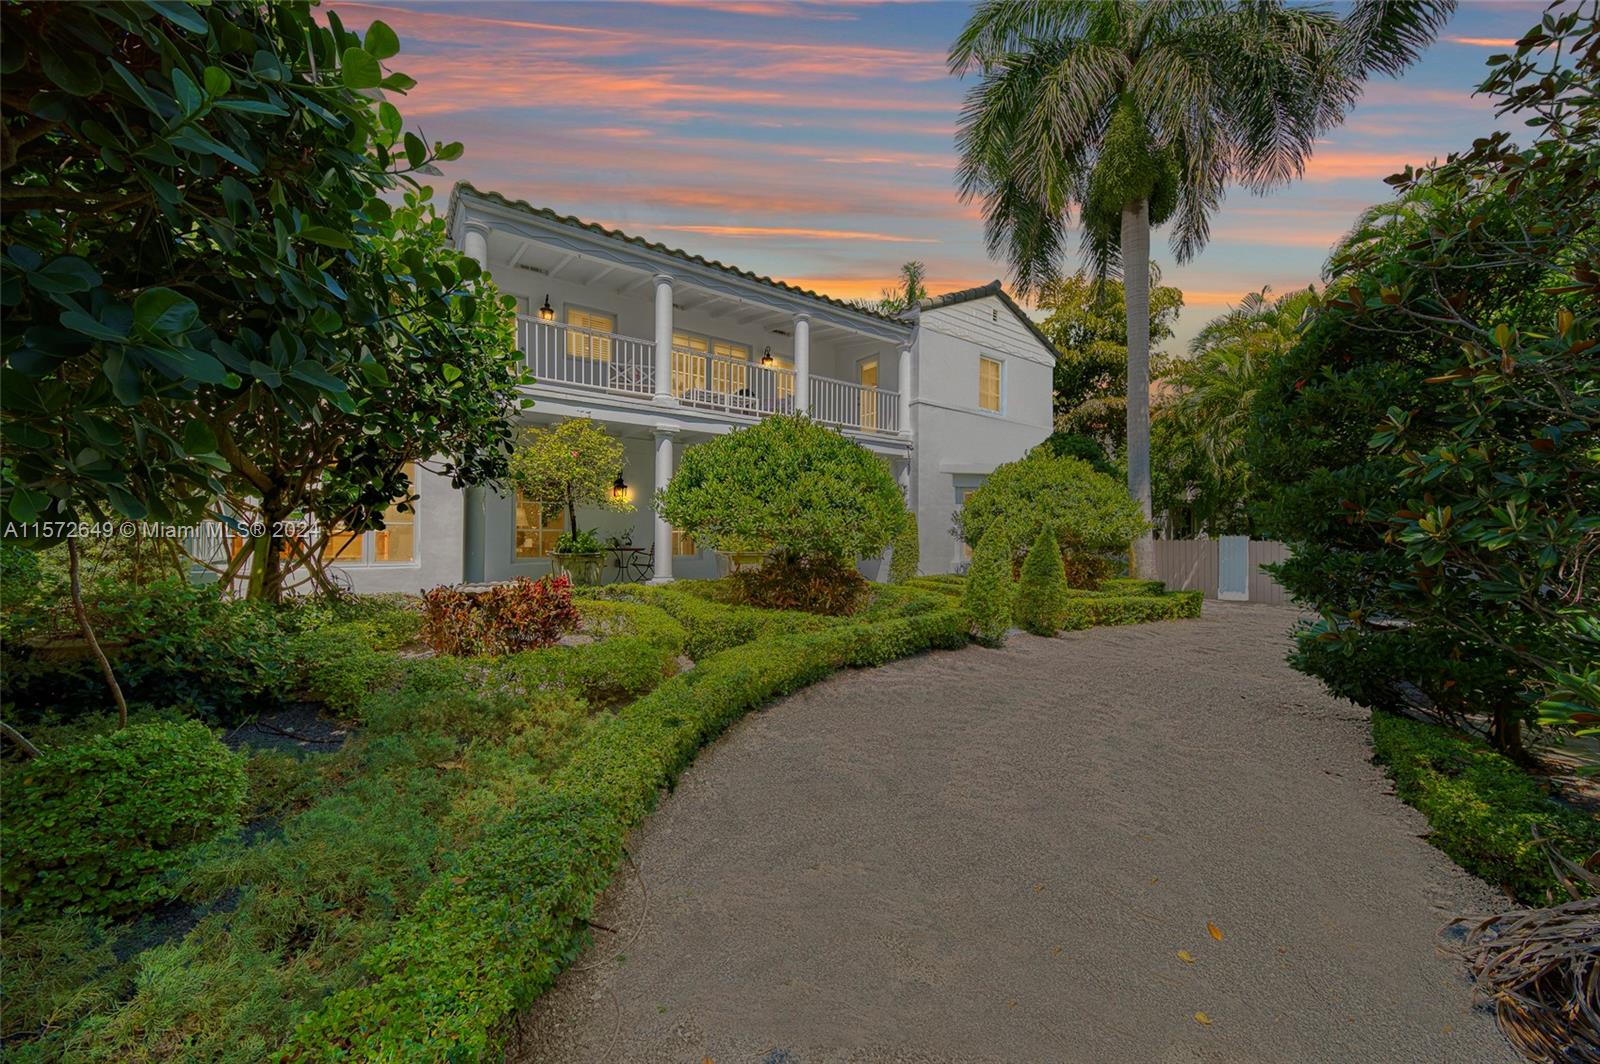 Property for Sale at 2534 Flamingo Dr, Miami Beach, Miami-Dade County, Florida - Bedrooms: 4 
Bathrooms: 4  - $5,350,000